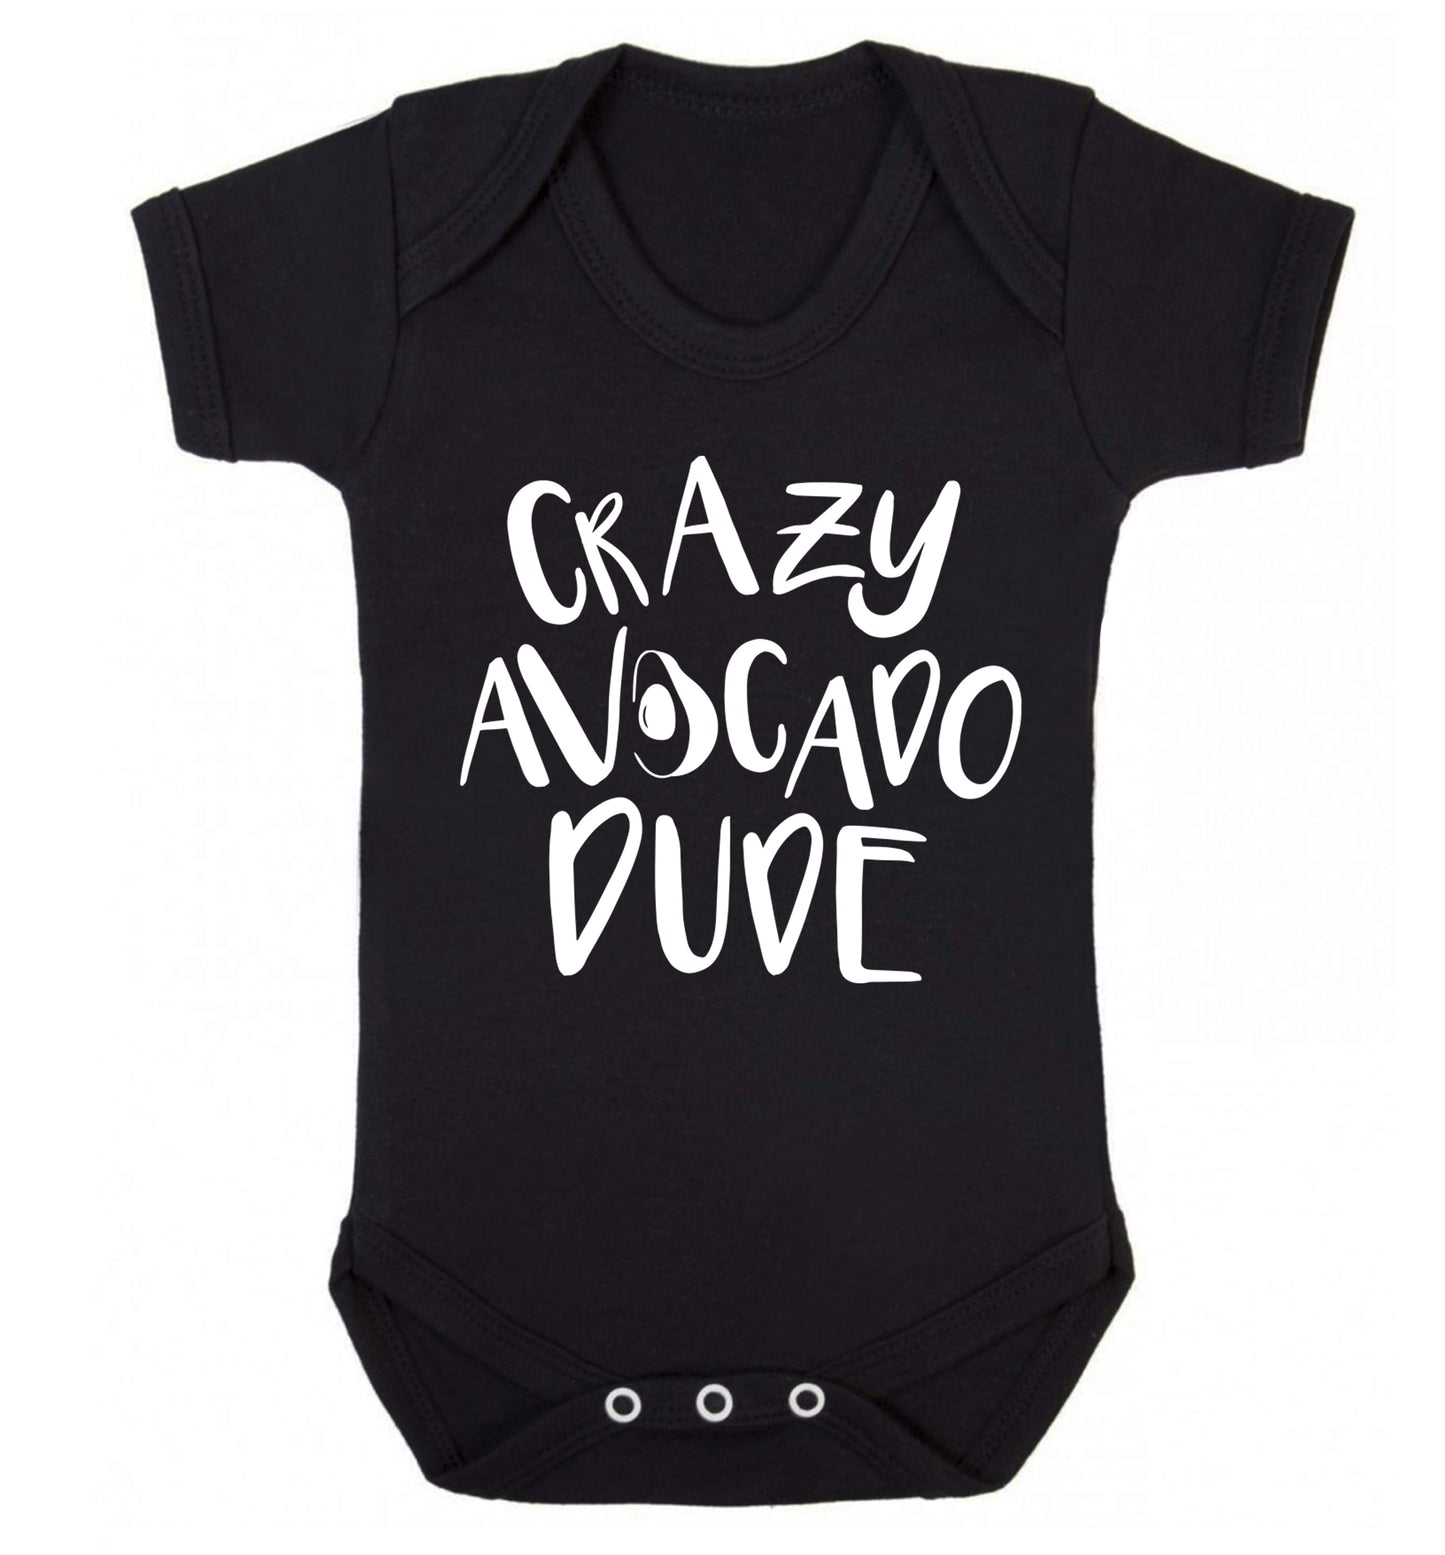 Crazy avocado dude Baby Vest black 18-24 months